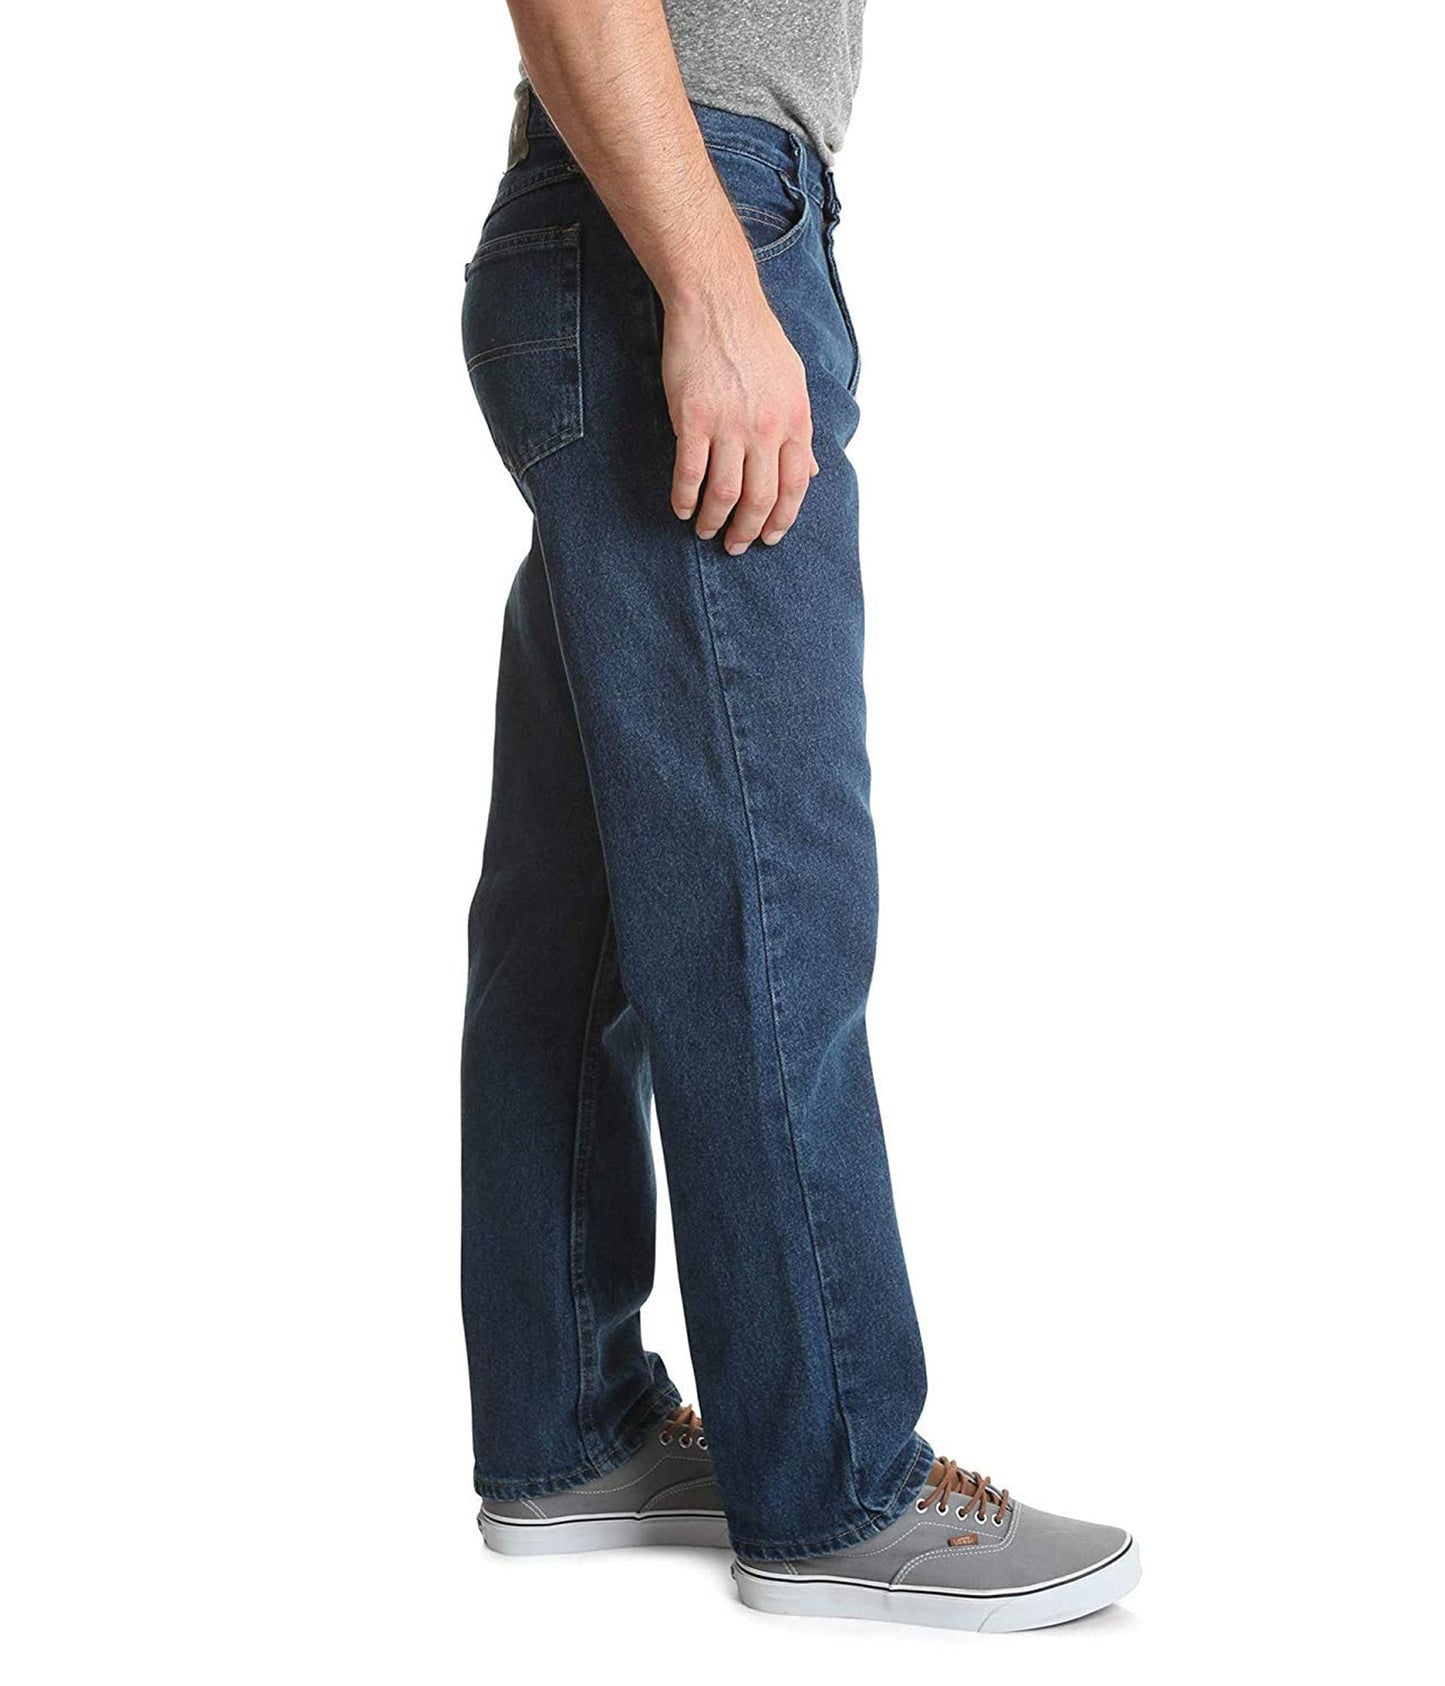 Wrangler Authentics Men's Big & Tall Classic 5-Pocket Relaxed Fit Cotton Jean, Dark Stonewash, 44W x 29L